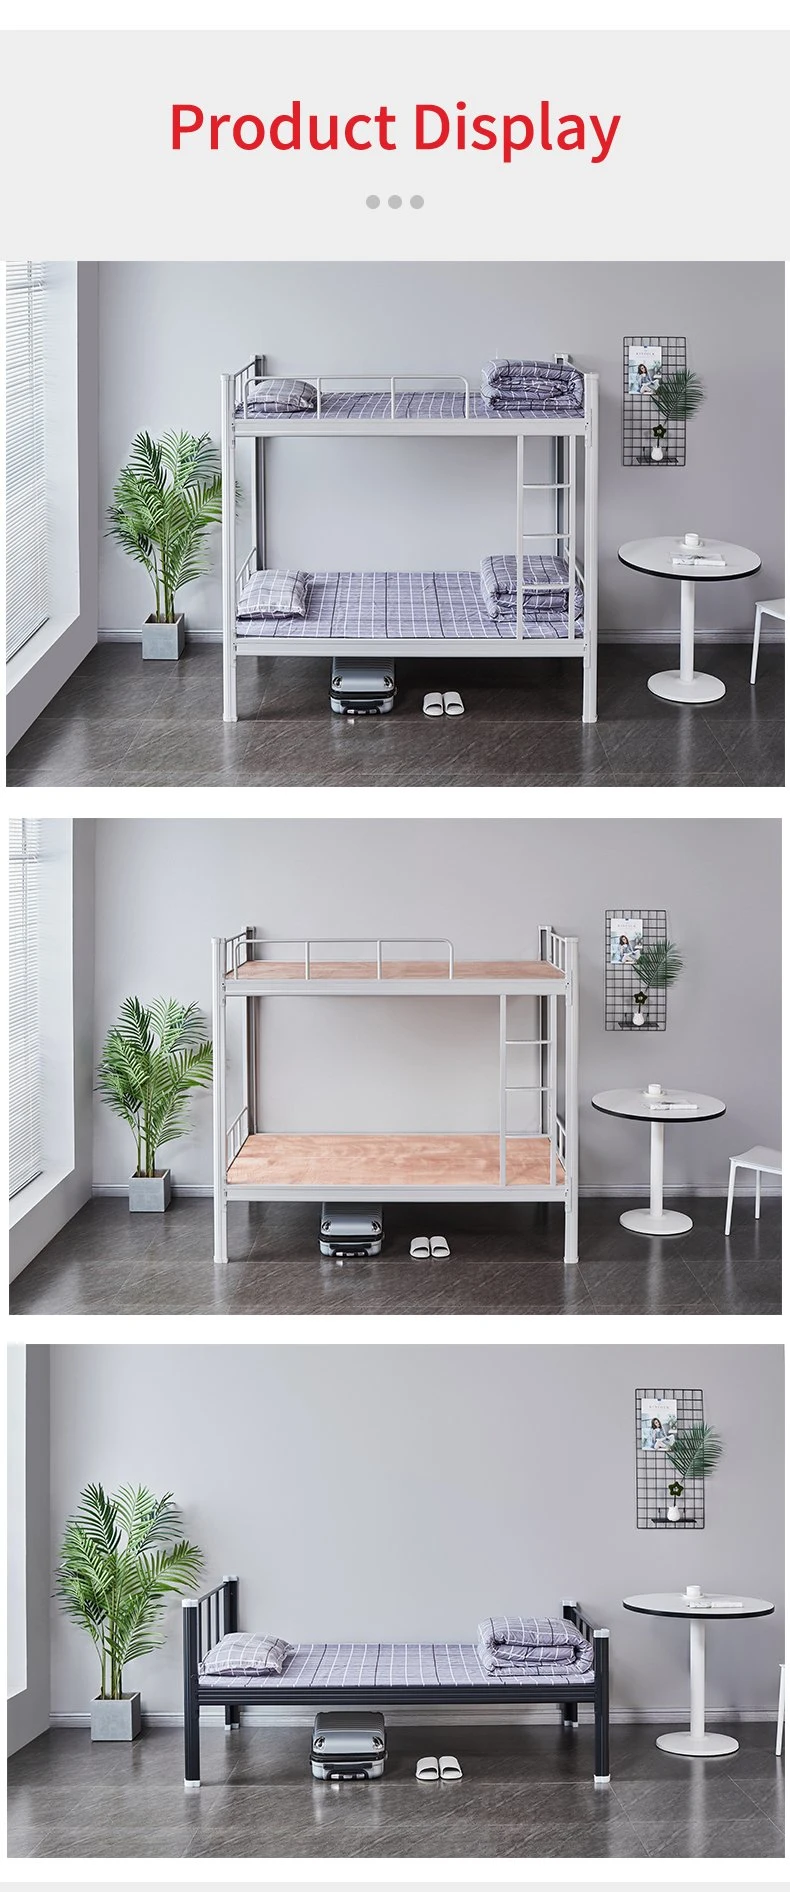 School/Bedroom Furniture Dormitory Steel Double Bed Metal Folding Frame Bunk Bed